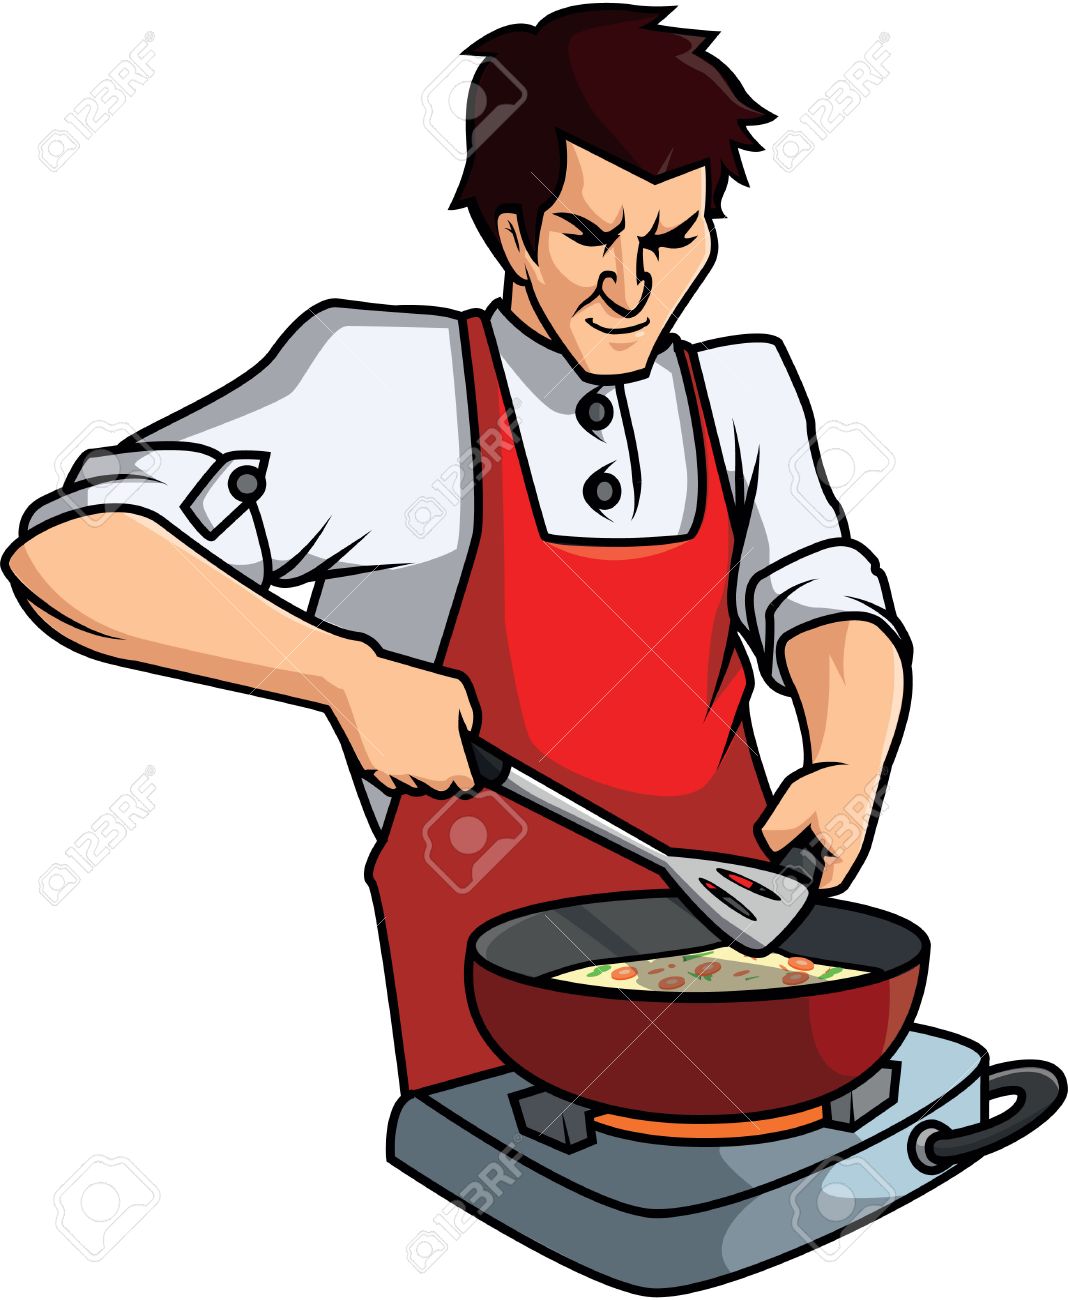 Cooking Man Cartoon Illustration Royalty SVG Cliparts 1068x1300